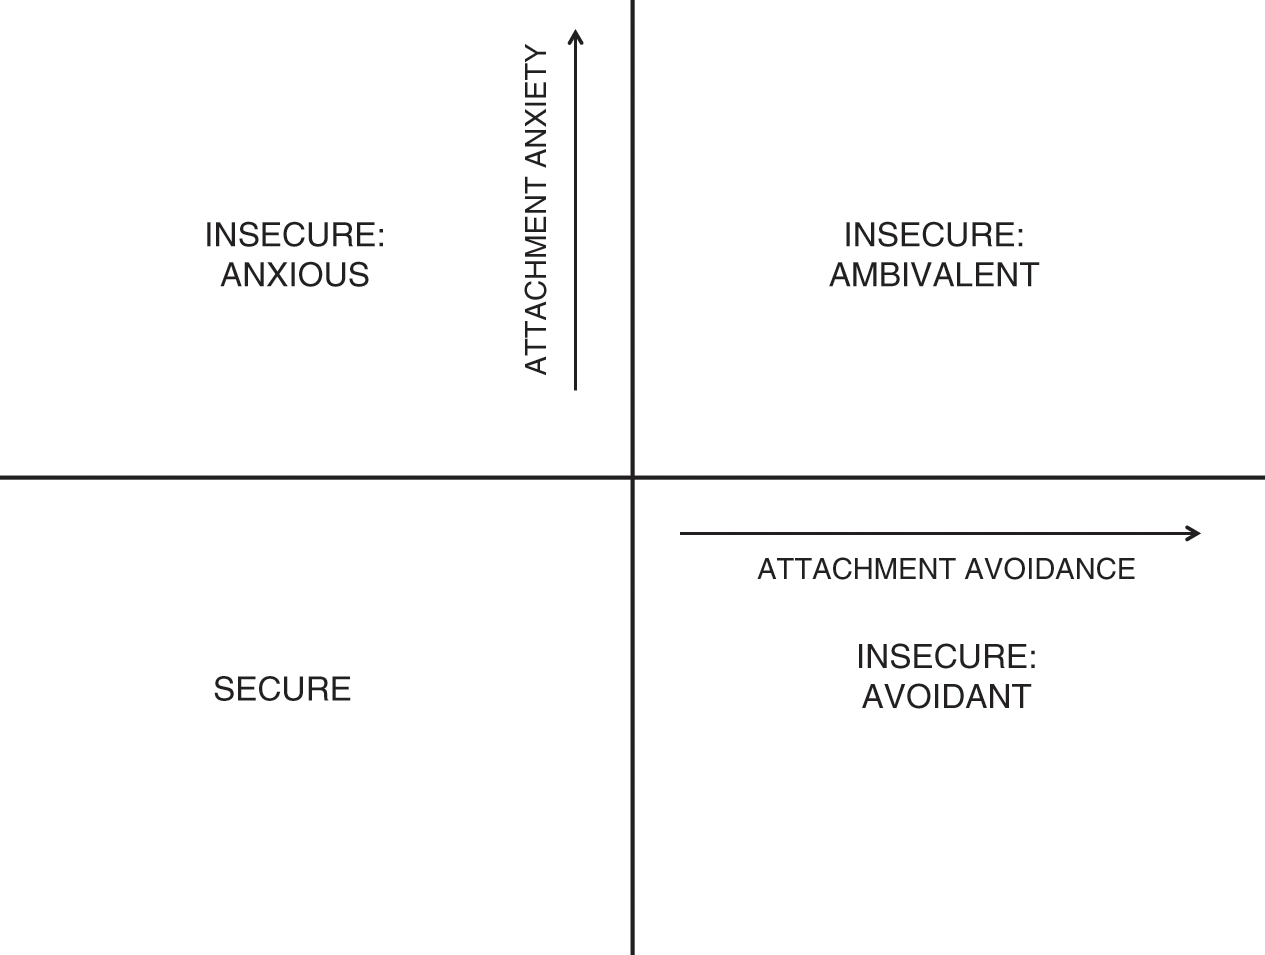 Actor-partner model for avoidant attachment dimension